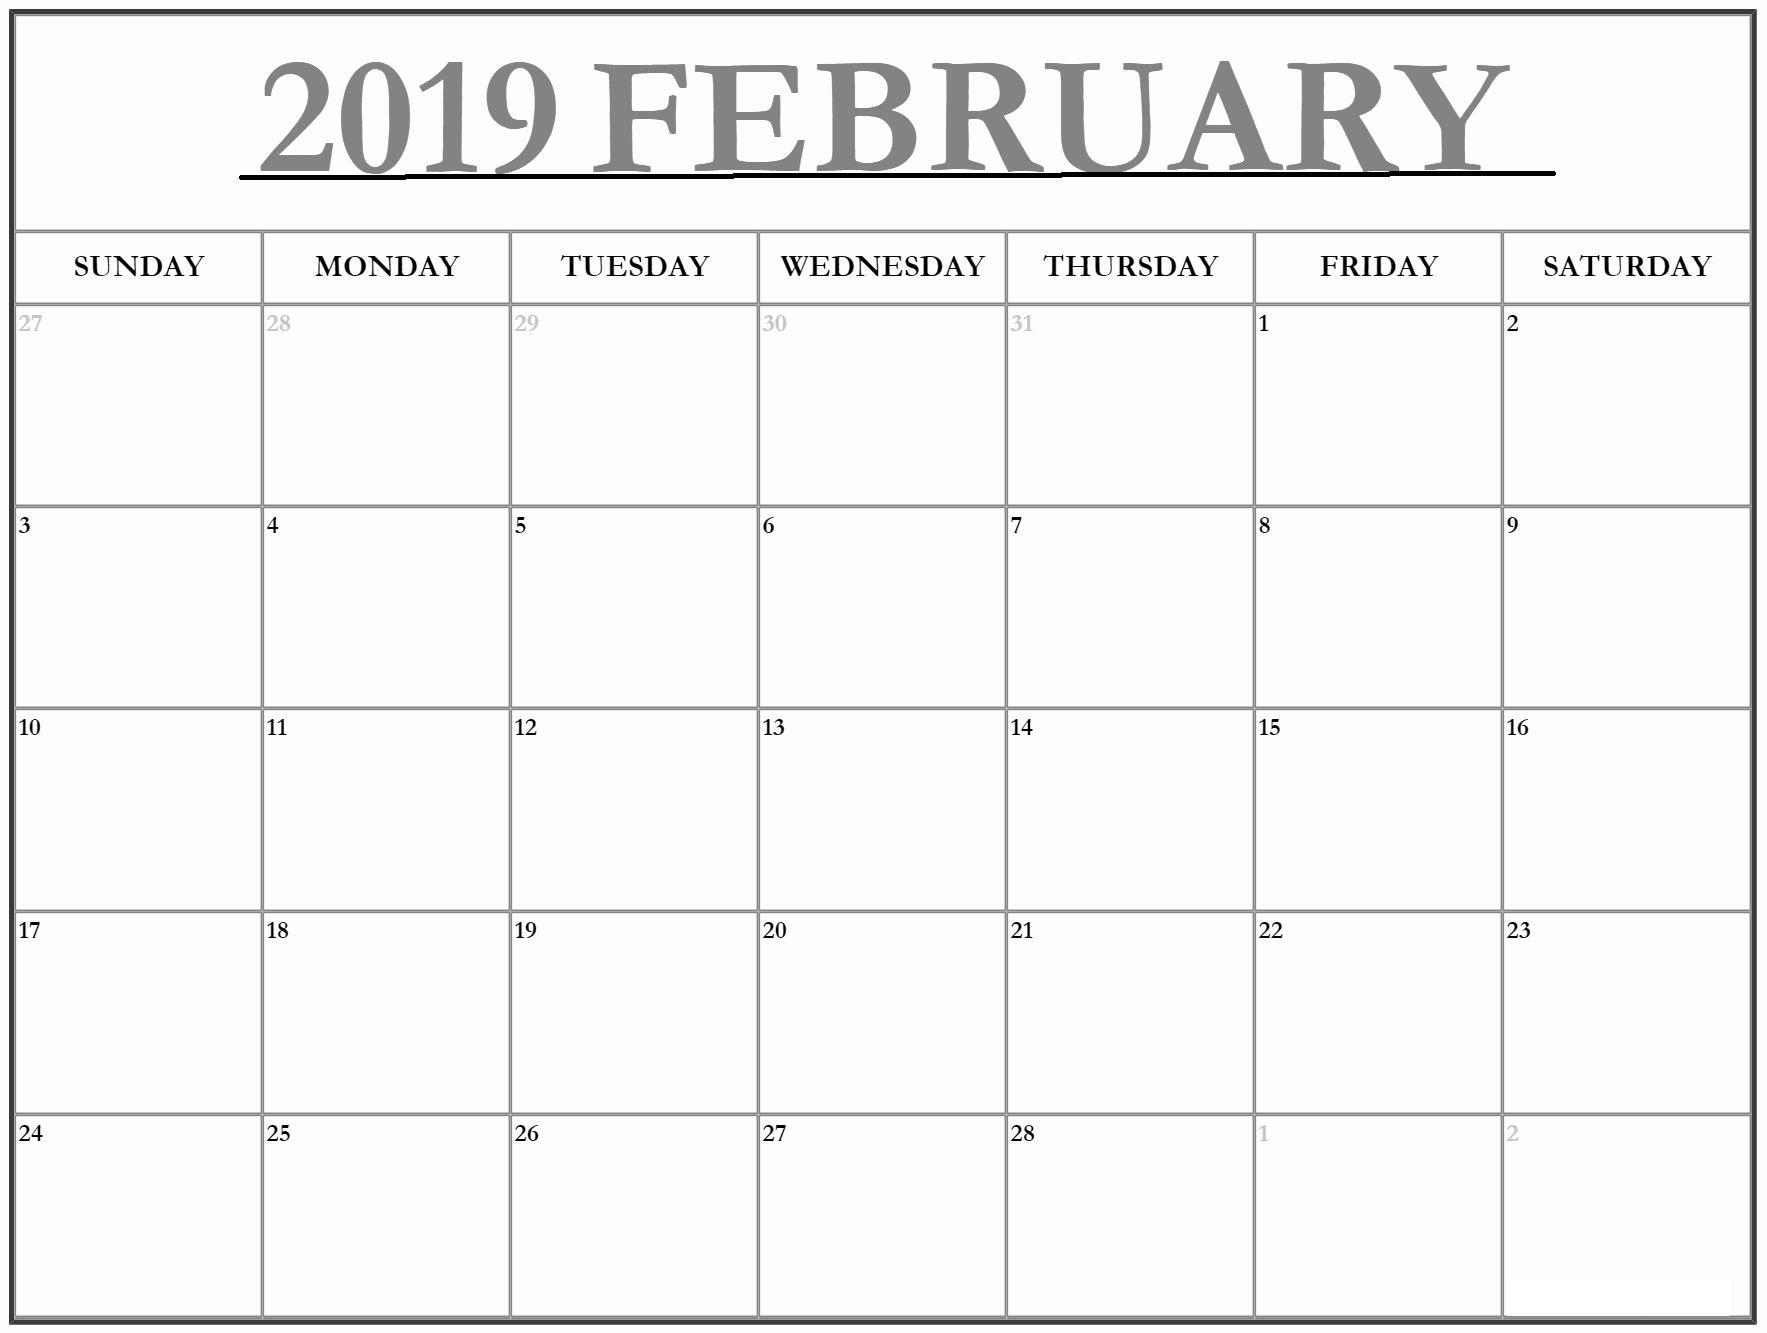 Monthly Calendar Template February 2019